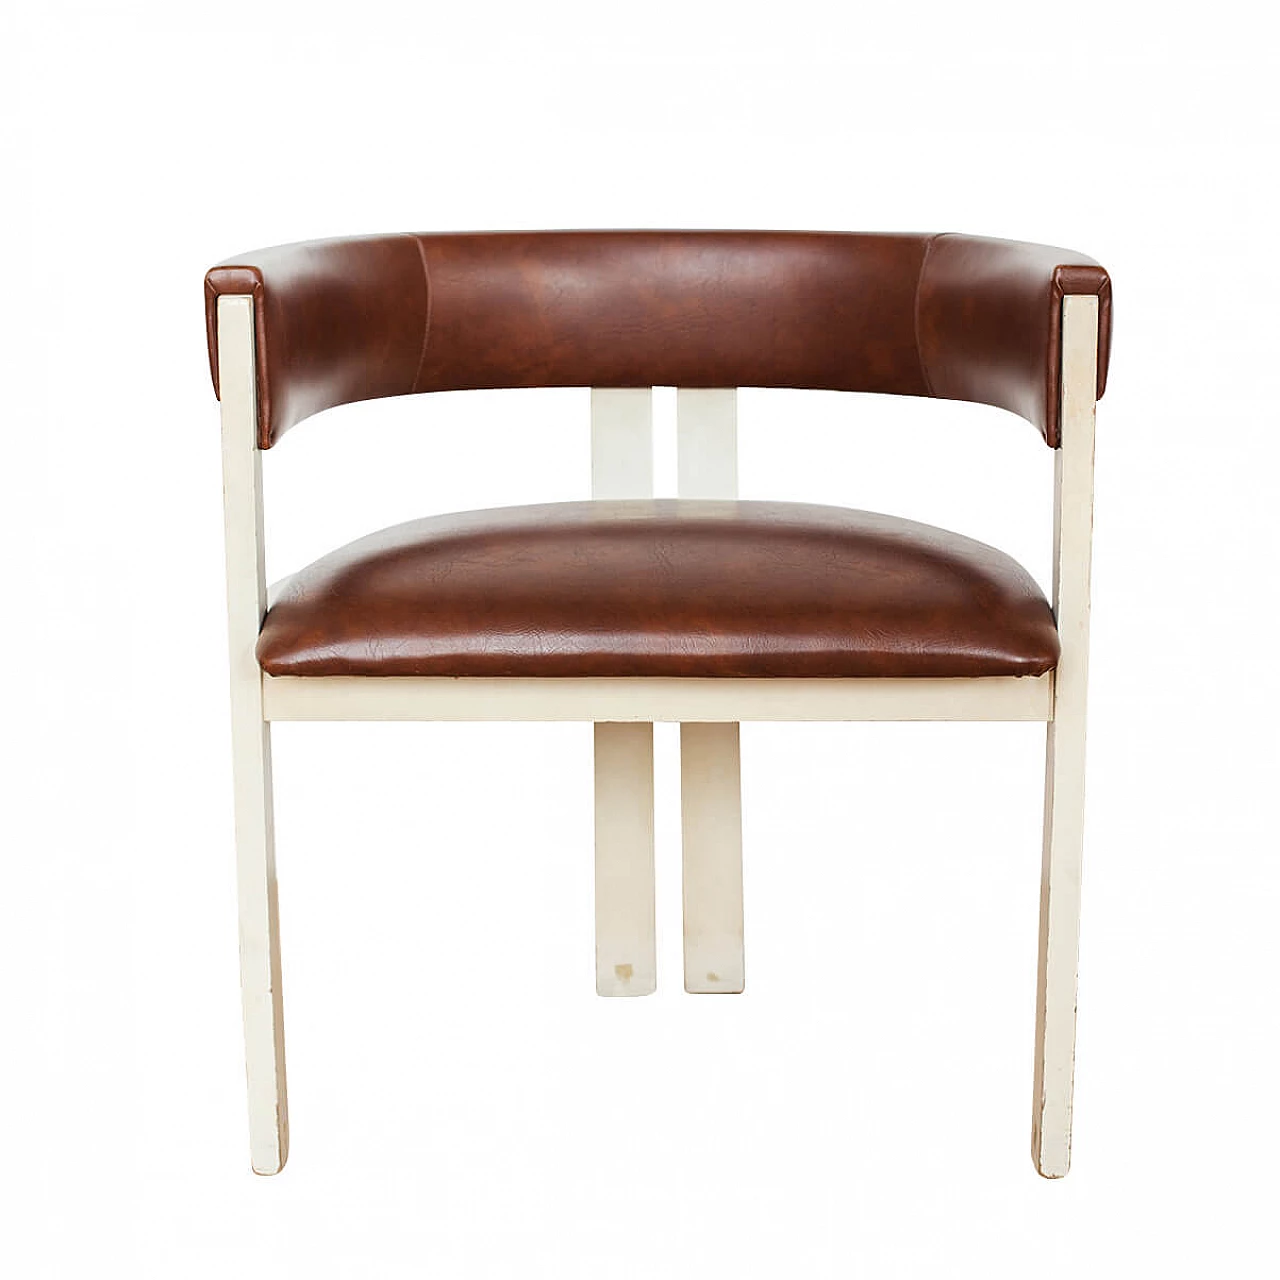 Pigreco prototype armchair by Tobia Scarpa, 1950s 1230248